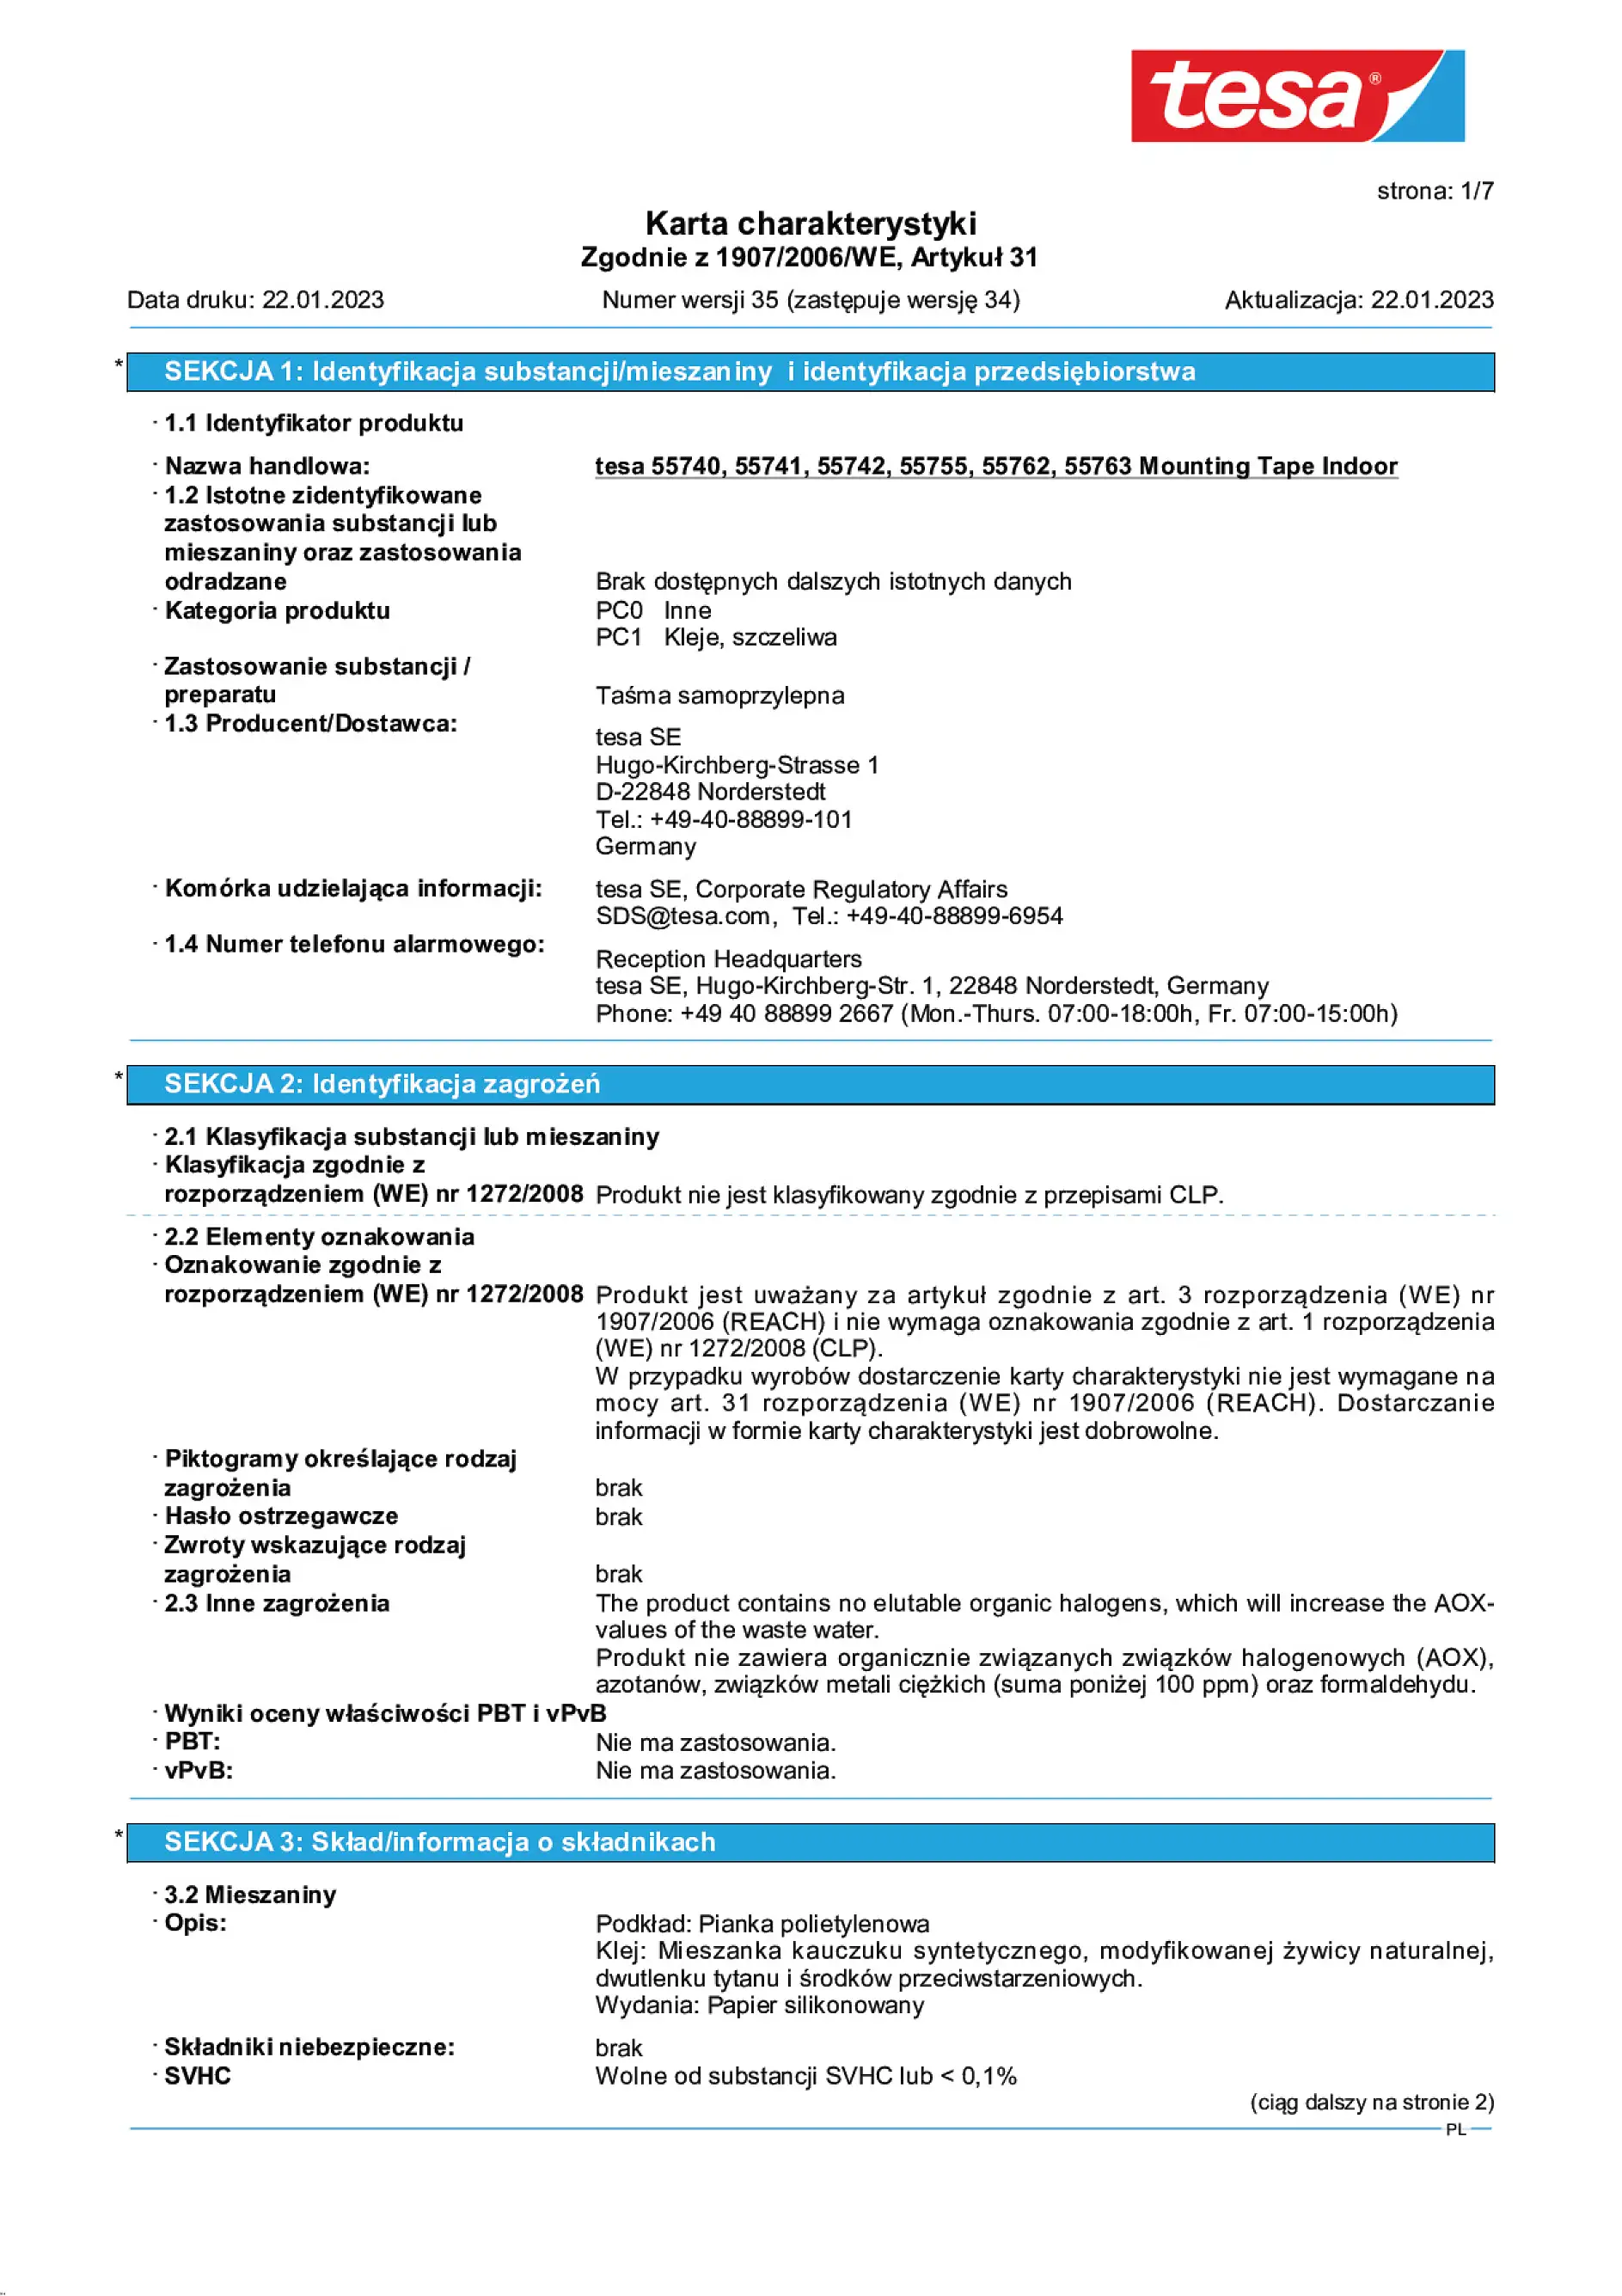 Safety data sheet_tesa® Powerbond 55740_pl-PL_v35